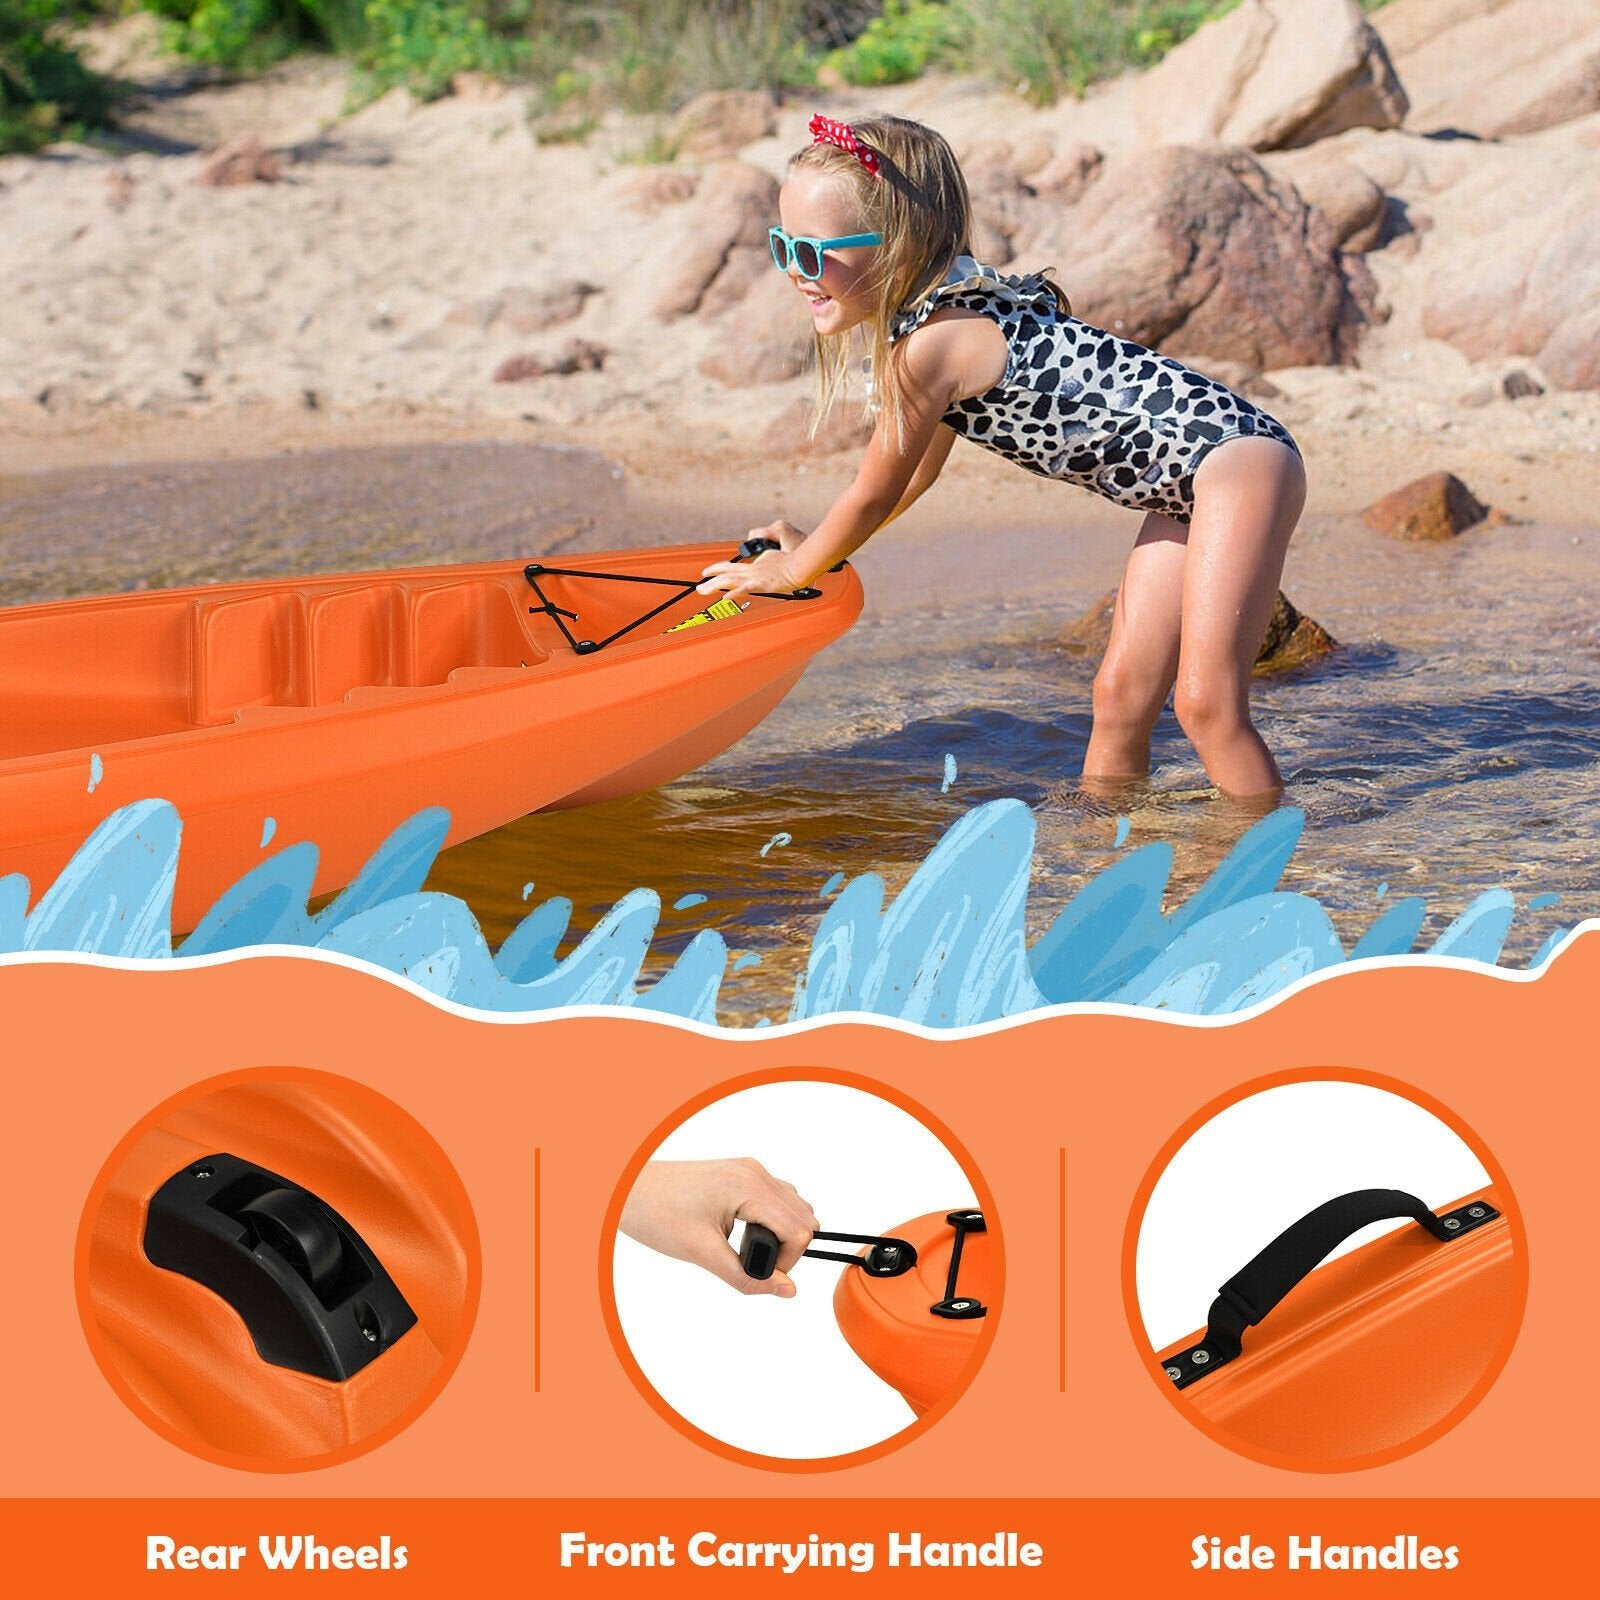 6 Feet Youth Kids Kayak with Bonus Paddle and Folding Backrest for Kid Over 5, Orange - Gallery Canada